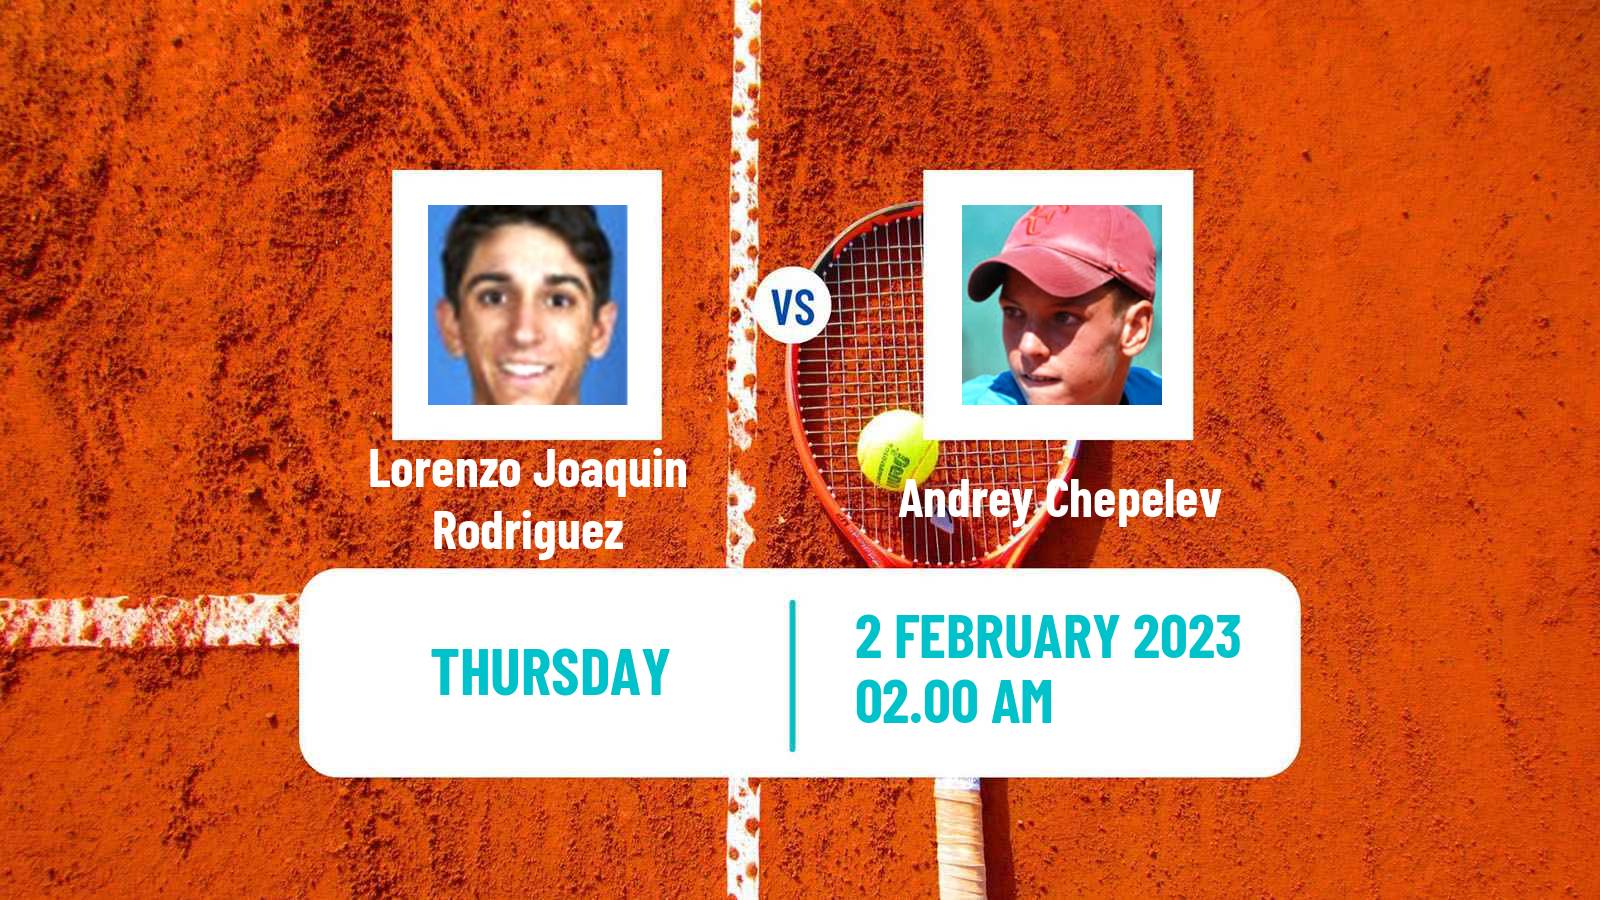 Tennis ITF Tournaments Lorenzo Joaquin Rodriguez - Andrey Chepelev